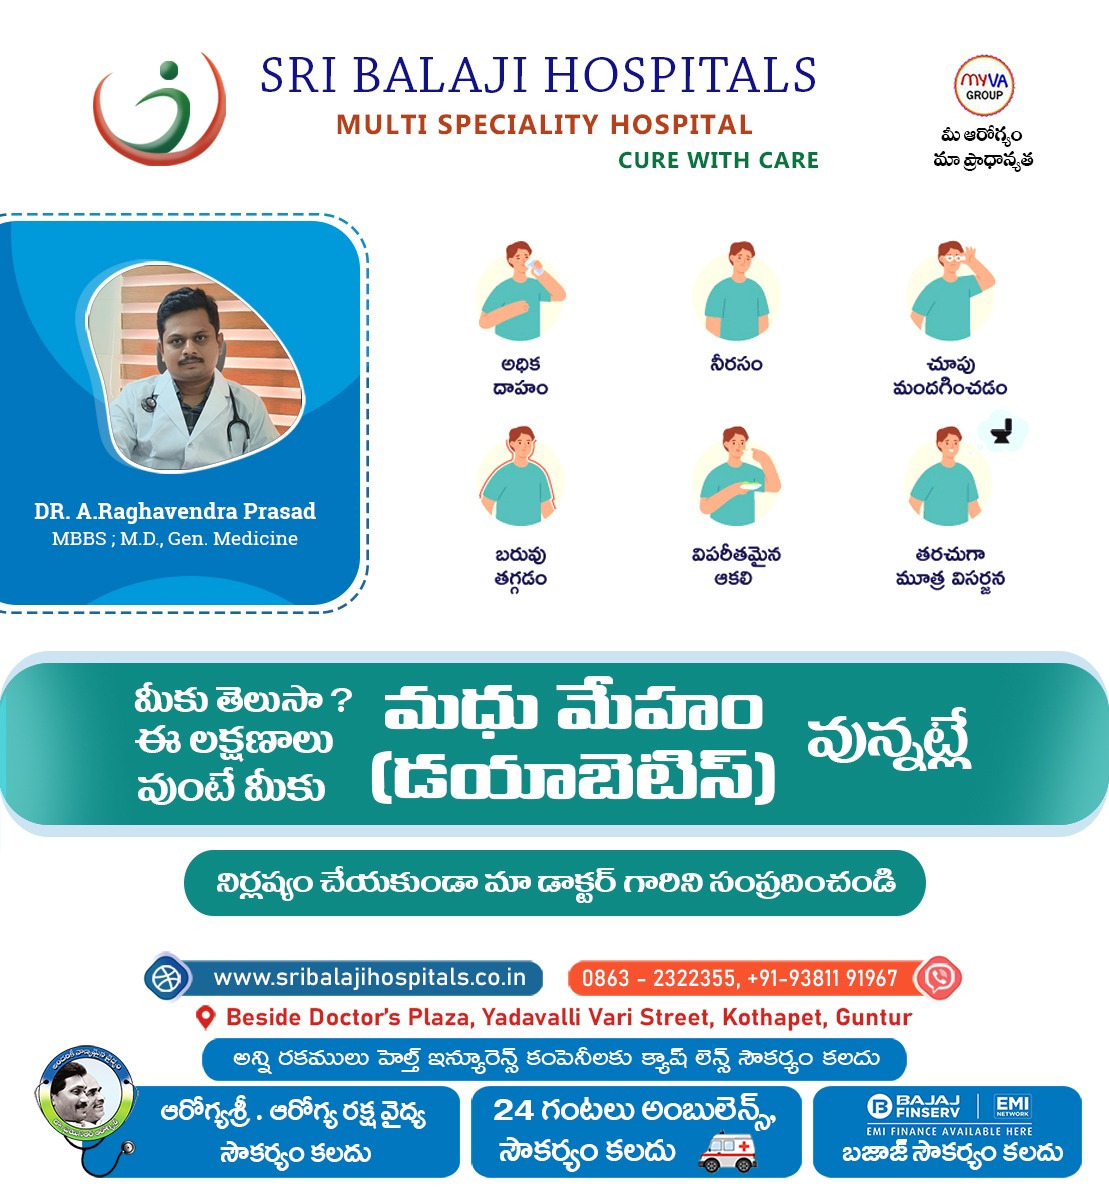 'Don't Ignore Diabetes Symptoms! Consult Dr. A. Raghavendra Prasad at Sri Balaji Hospital Guntur'

#DiabetesAwareness
#Healthcare
#ConsultADoctor
#SriBalajiHospital
#GunturHealthcare
#DiabetesSymptoms
#PreventDiabetes
#HealthCheckup
#GunturDoctors
#WellnessWednesday